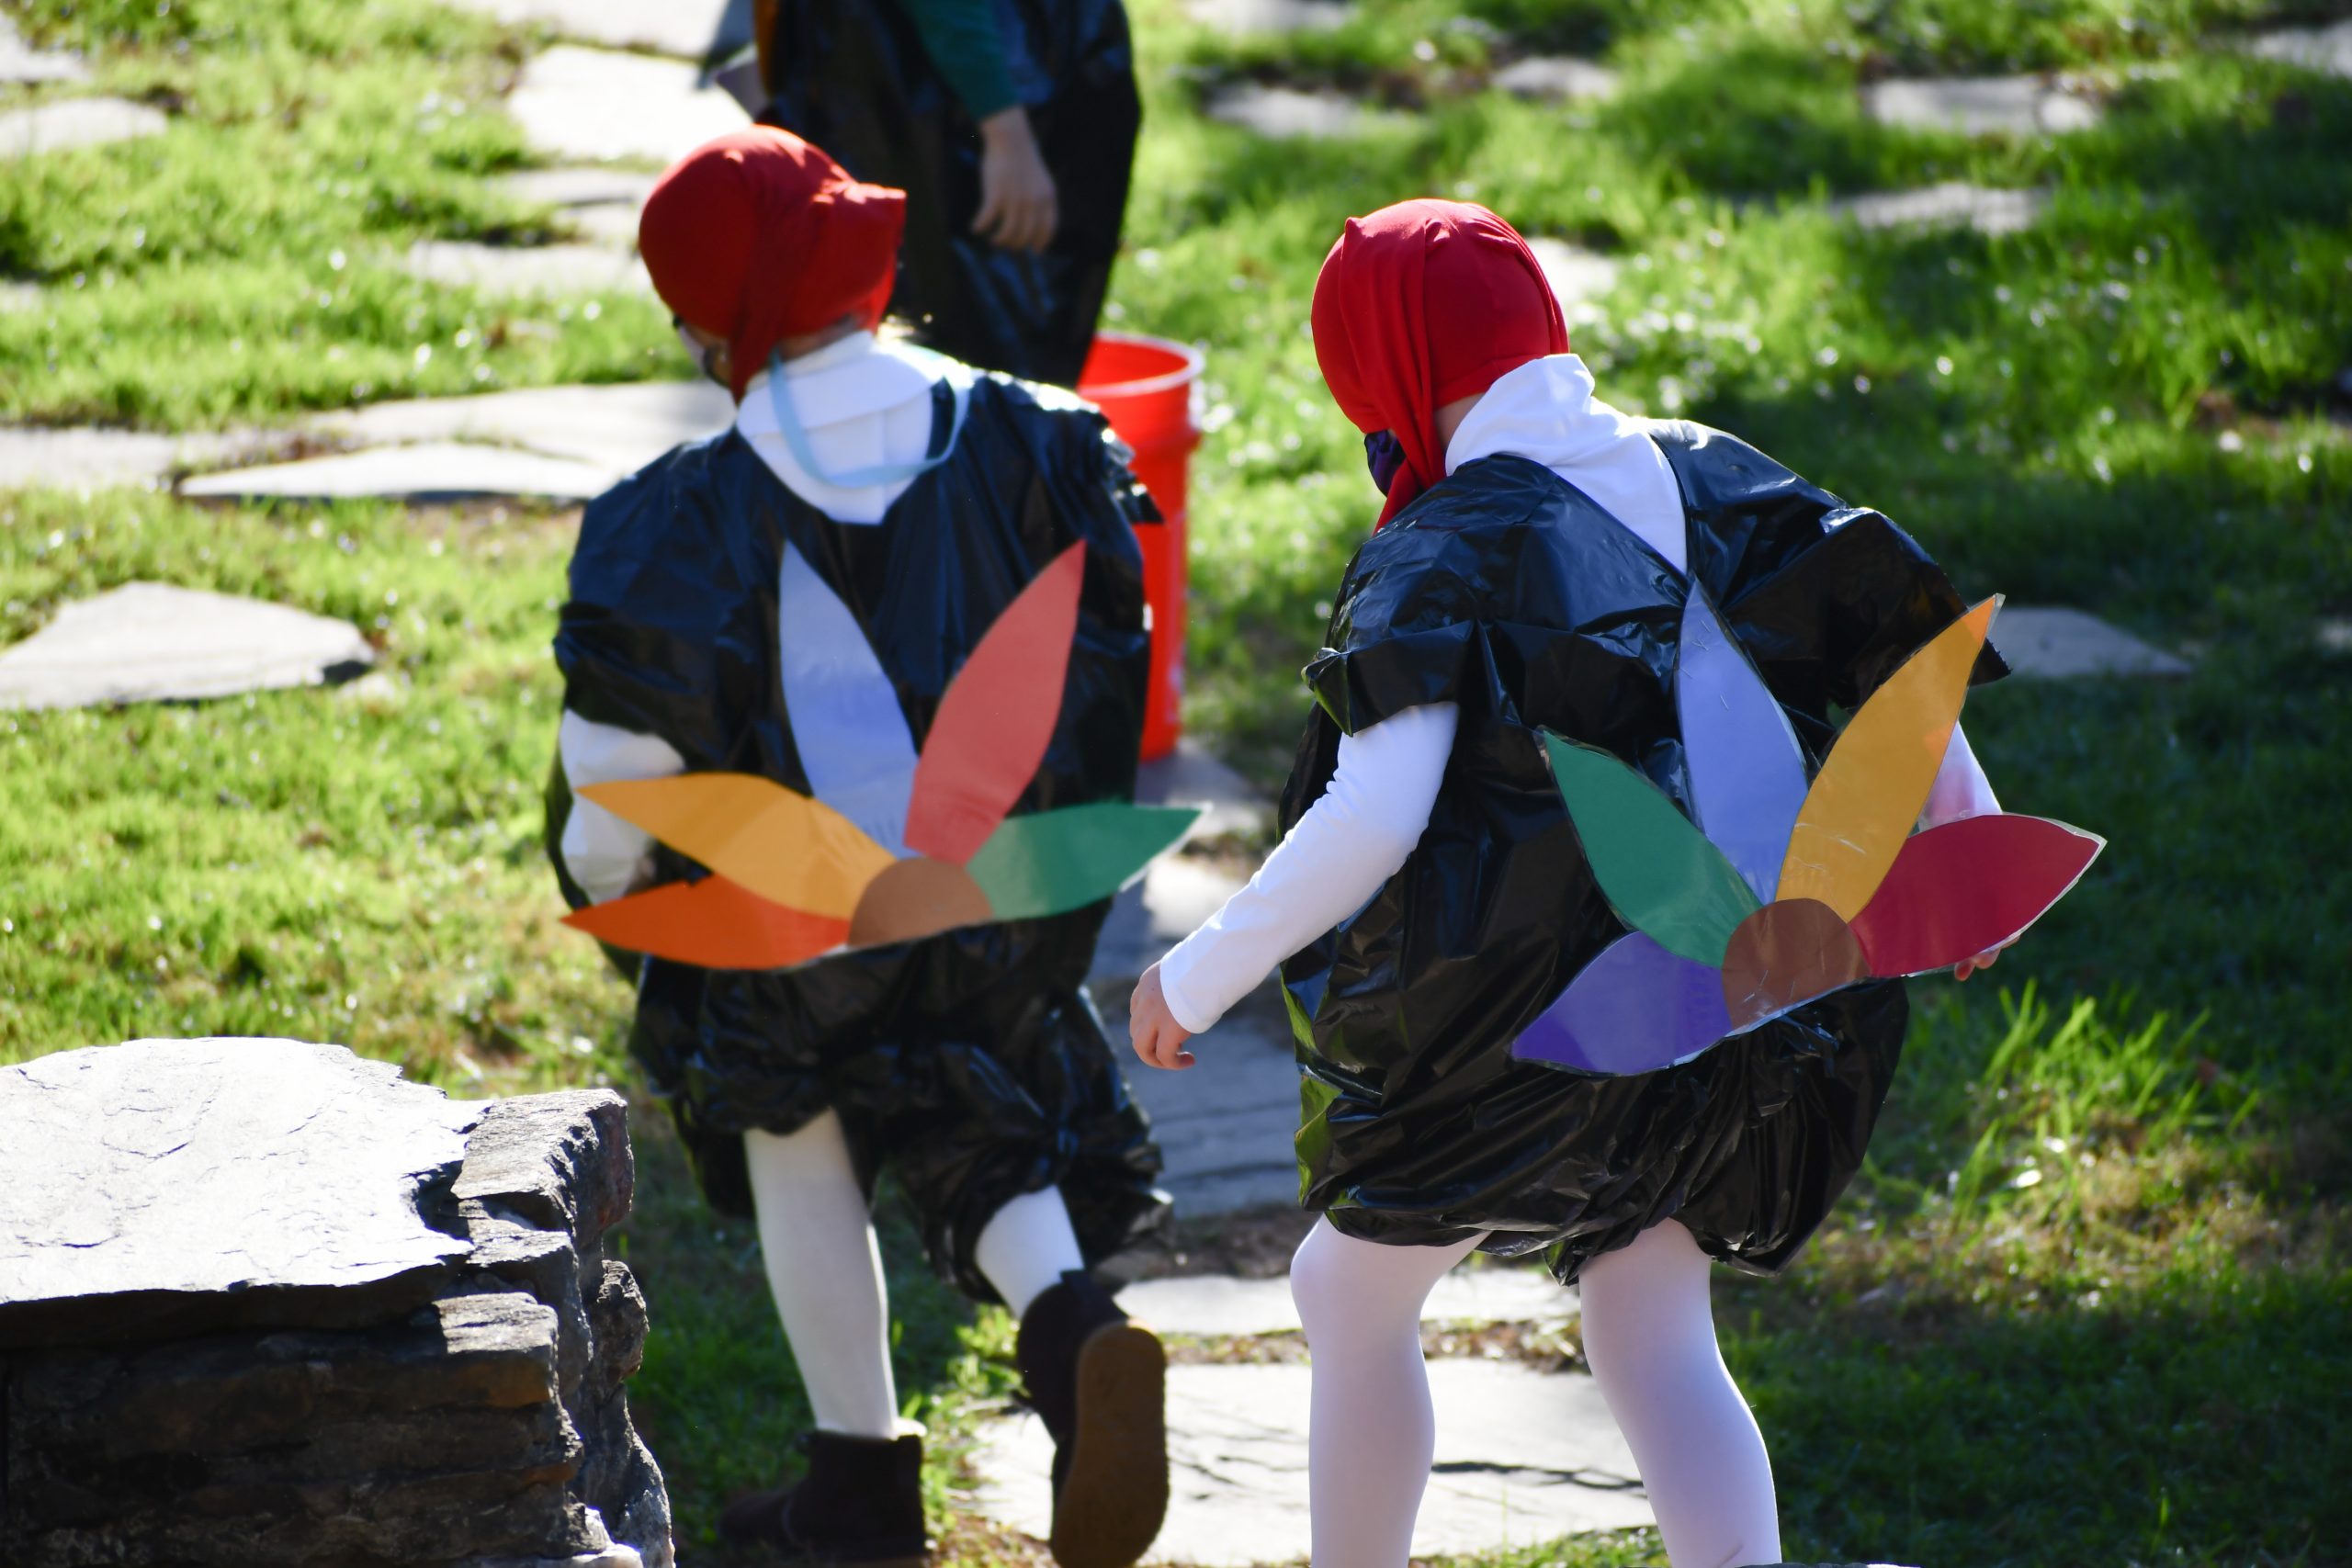 Students dressed as turkeys walk along a stone path.